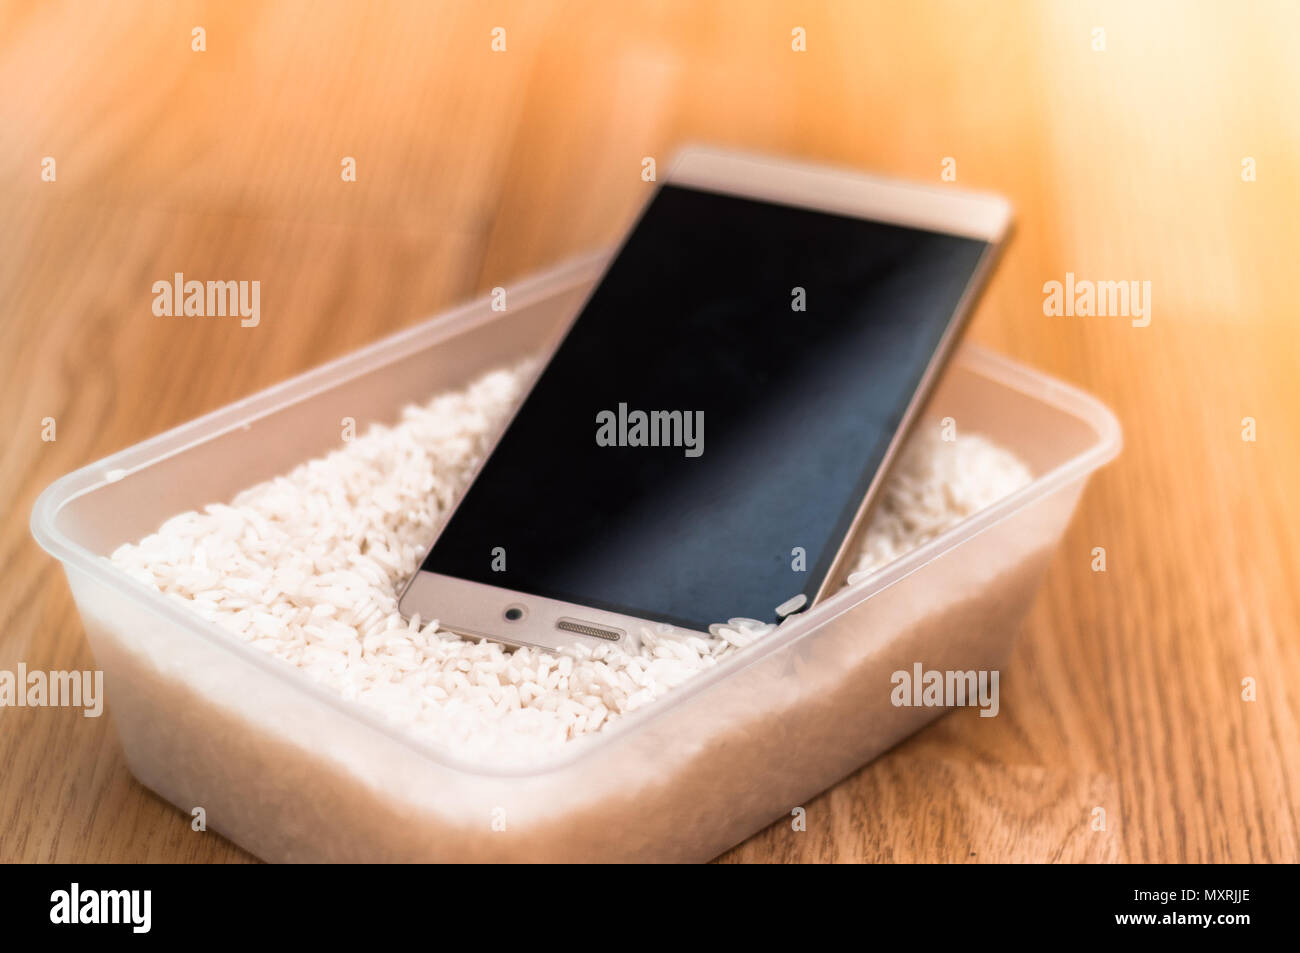 Wasser beschädigt Telefon trocknen Reis Stockfoto